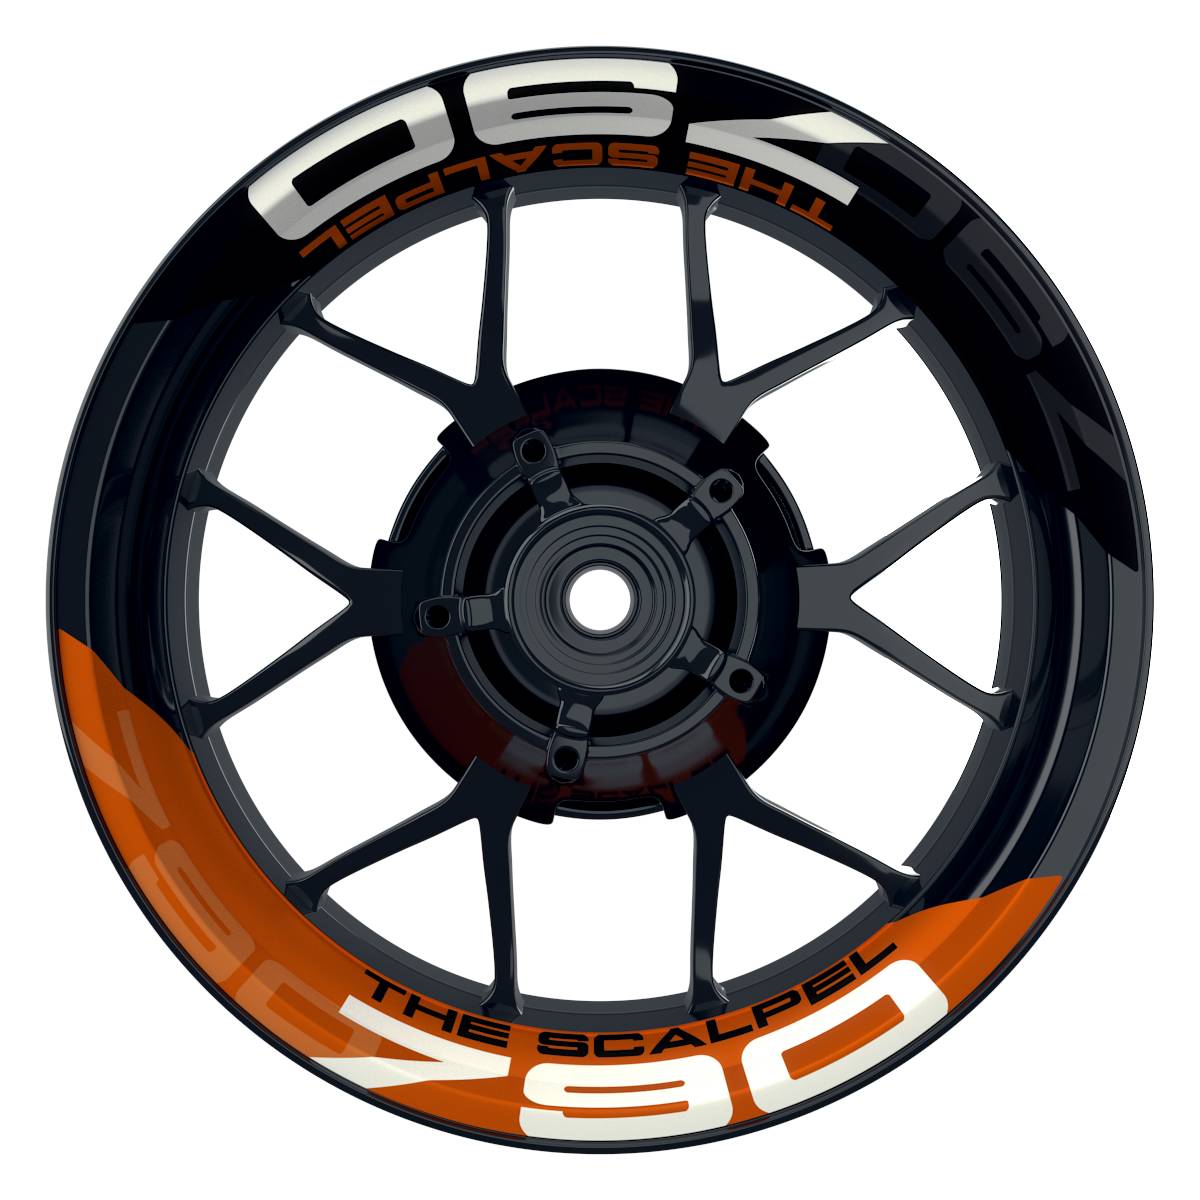 Wheelsticker Felgenaufkleber THE SCALPEL 790 Supermoto halb halb V2 schwarz orange Frontansicht